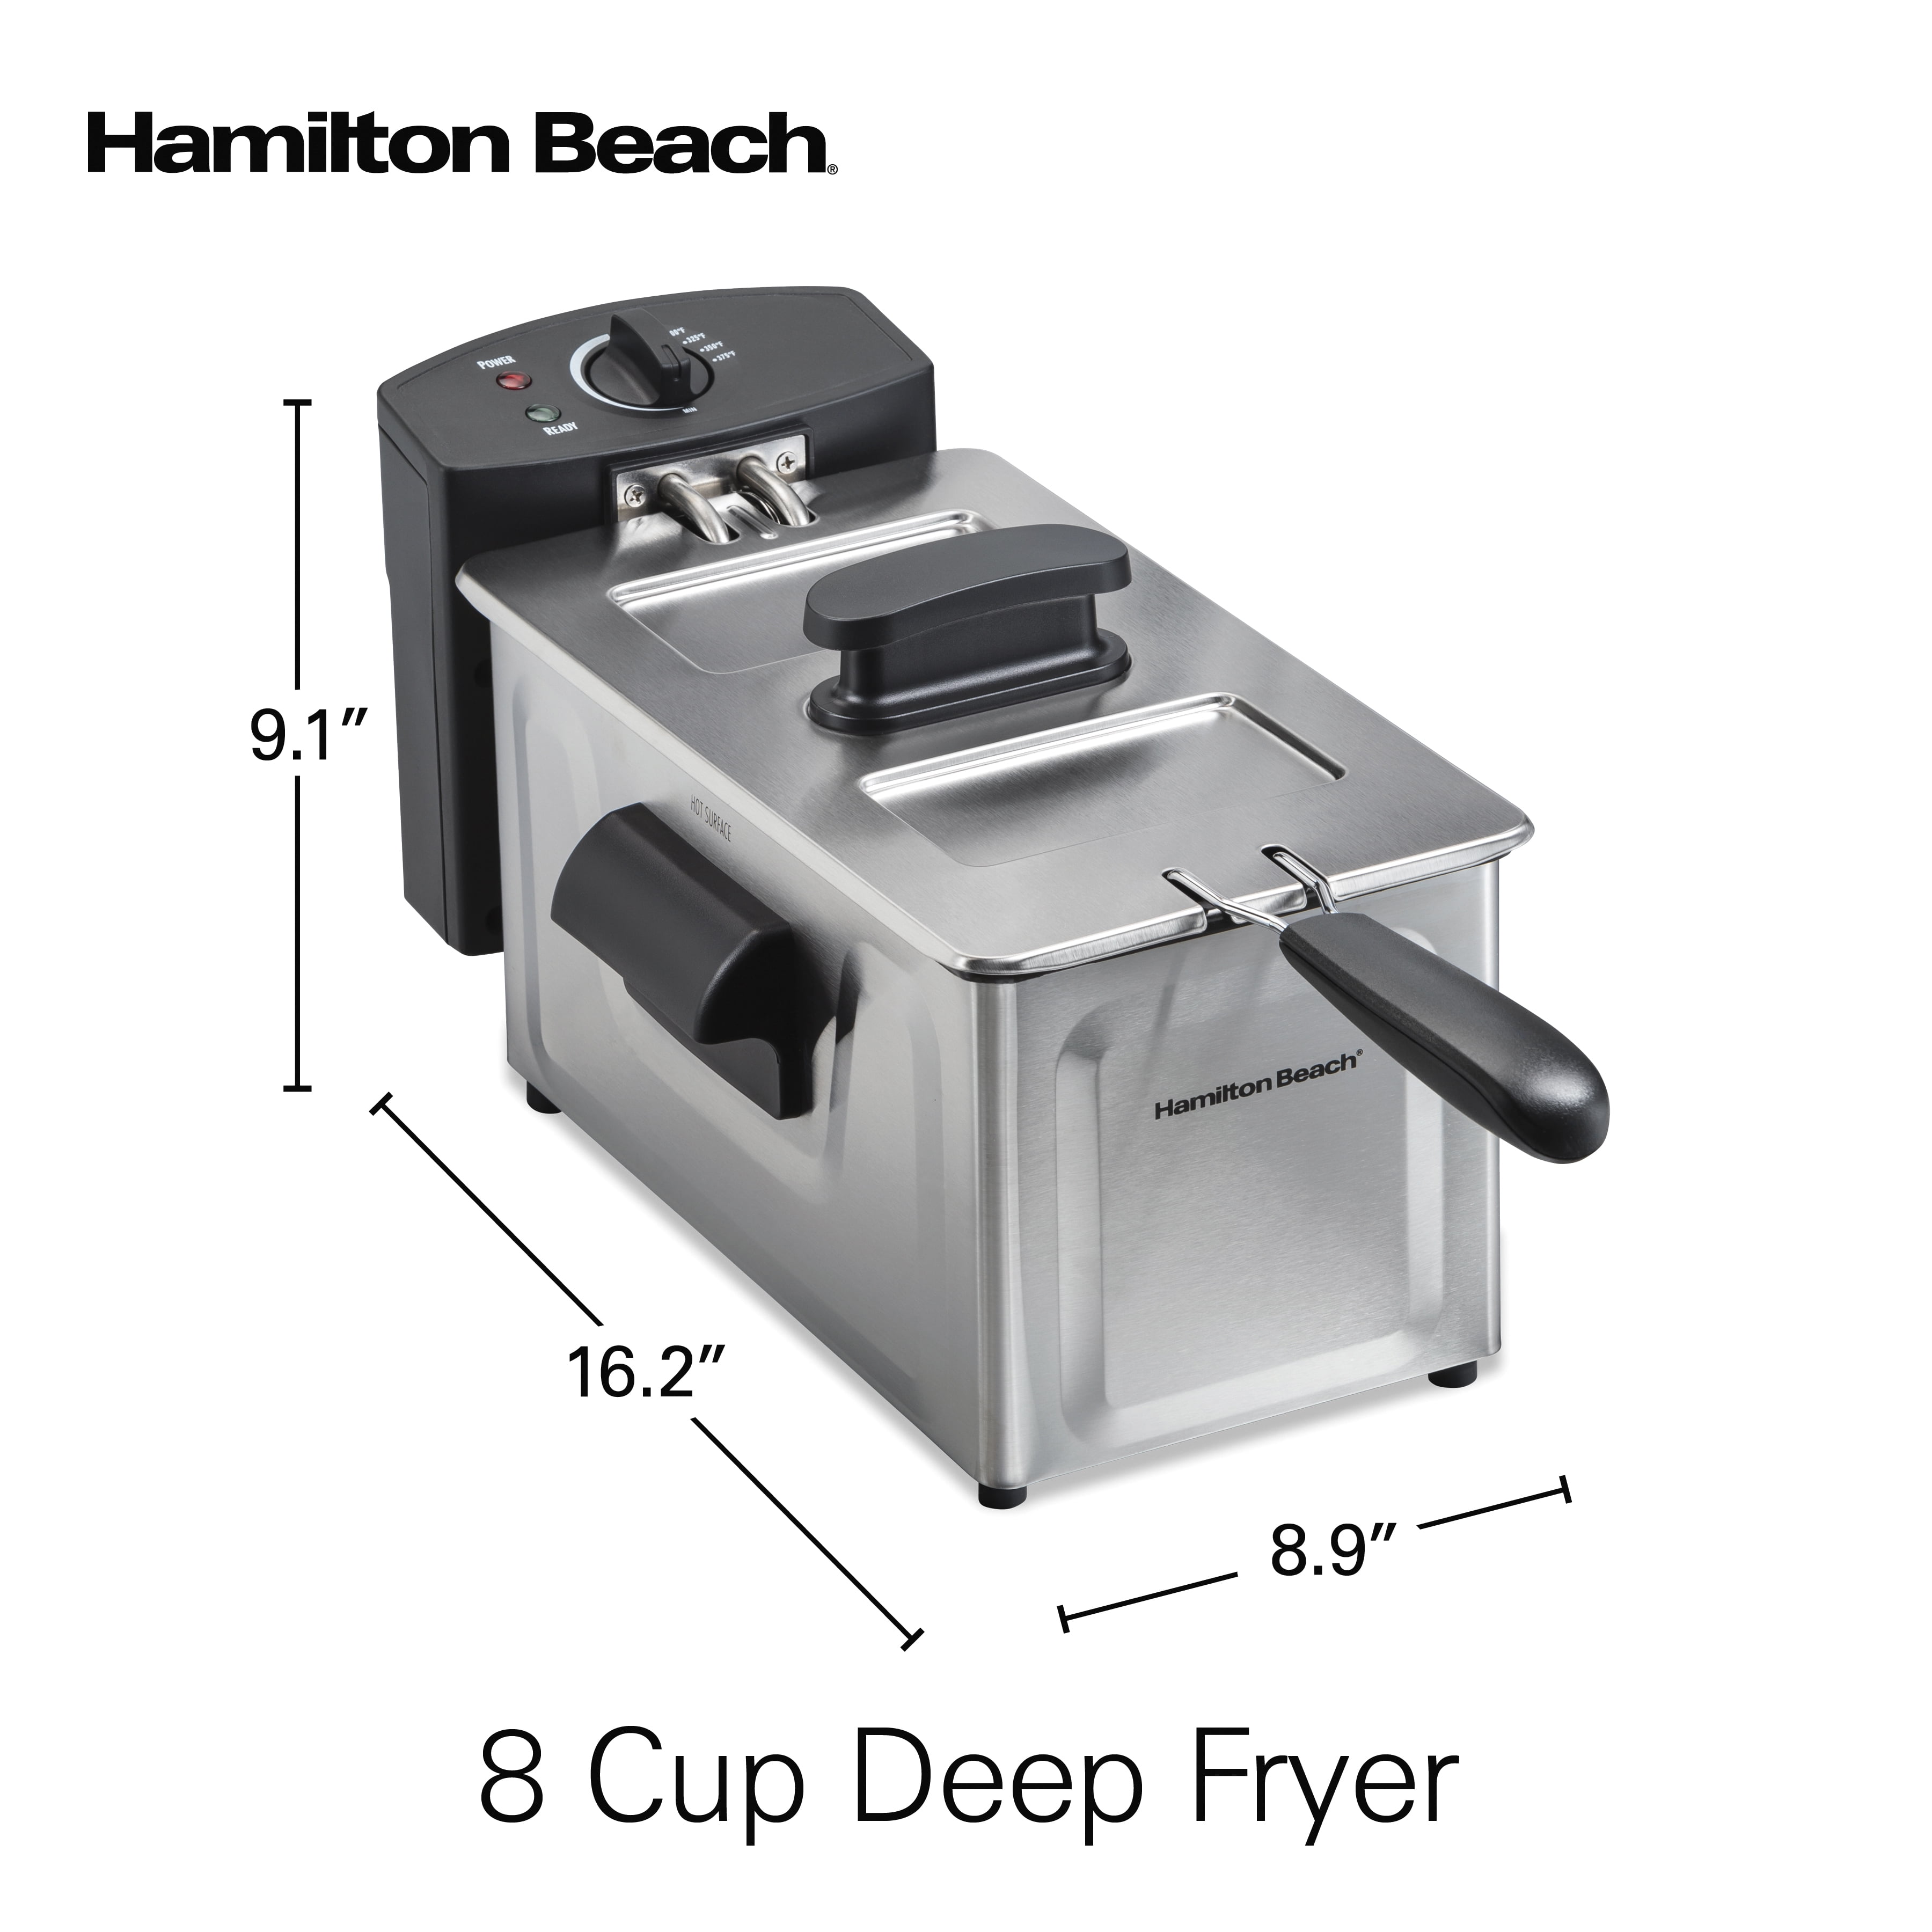 Hamilton Beach 8 Cup Deep Fryer, Red - 35336